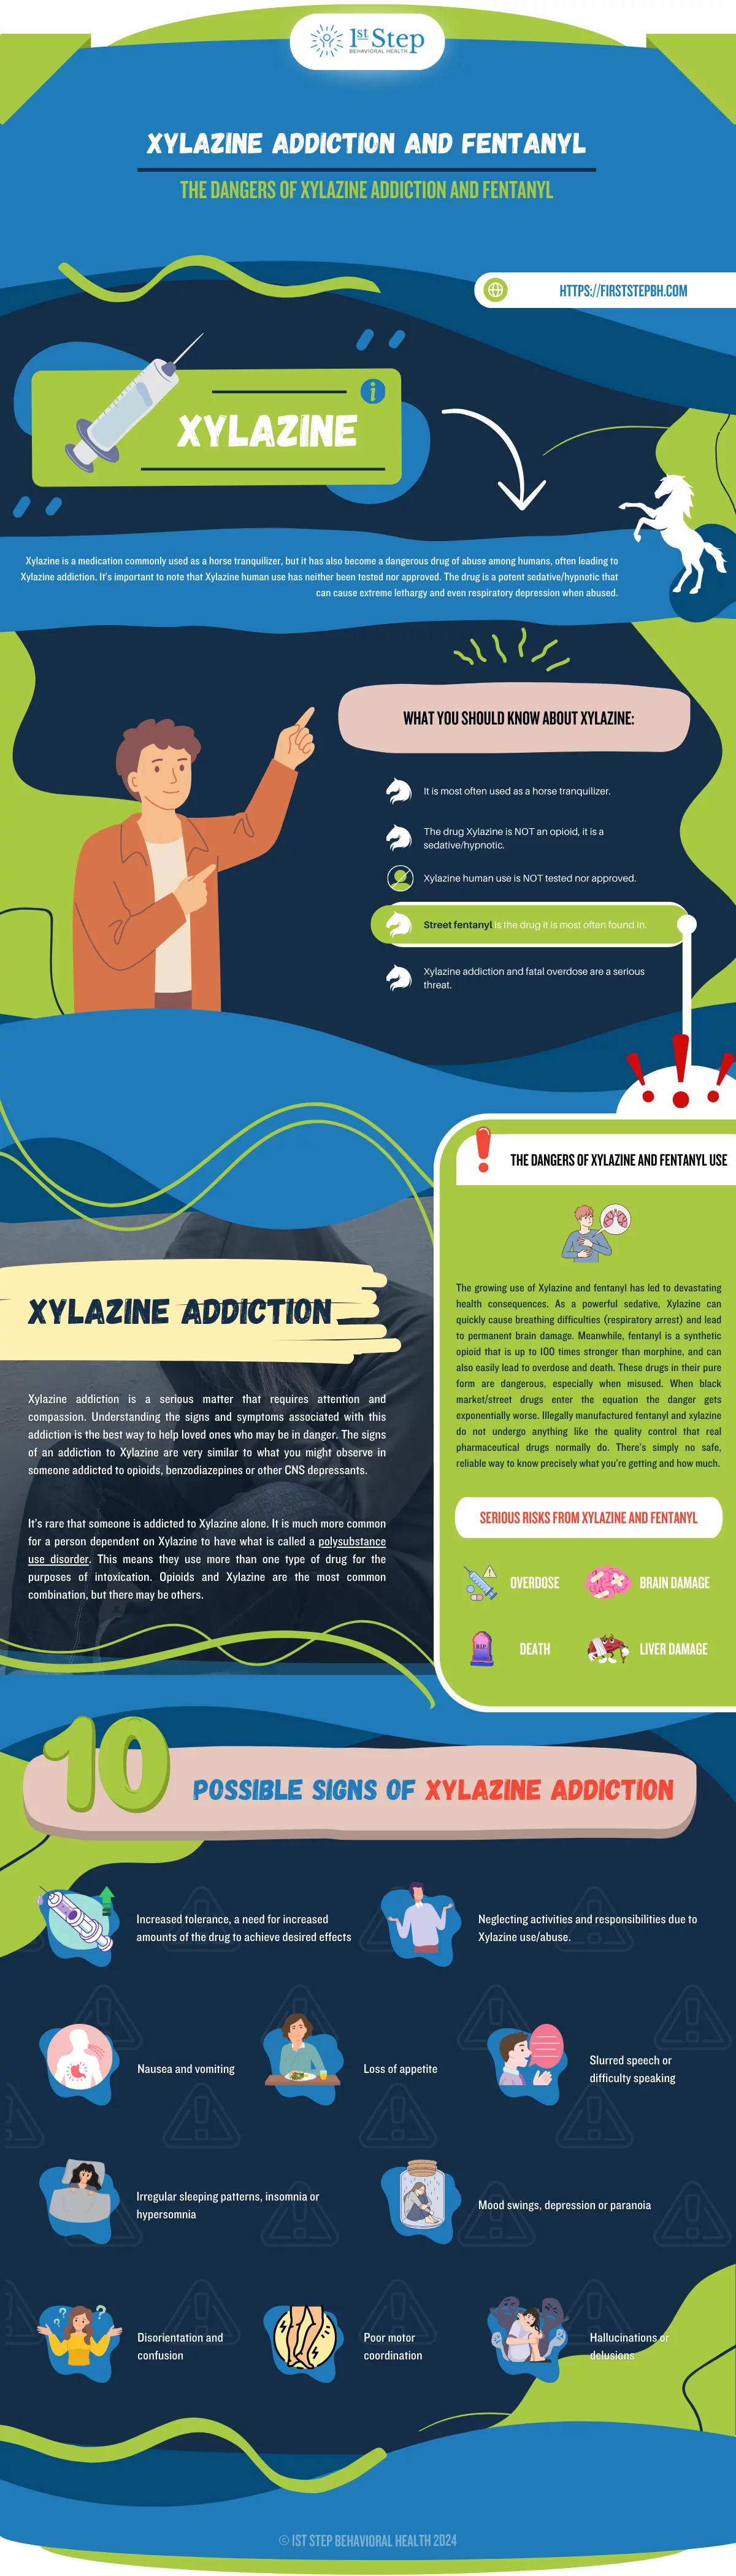 xylazine addiction and fentanyl